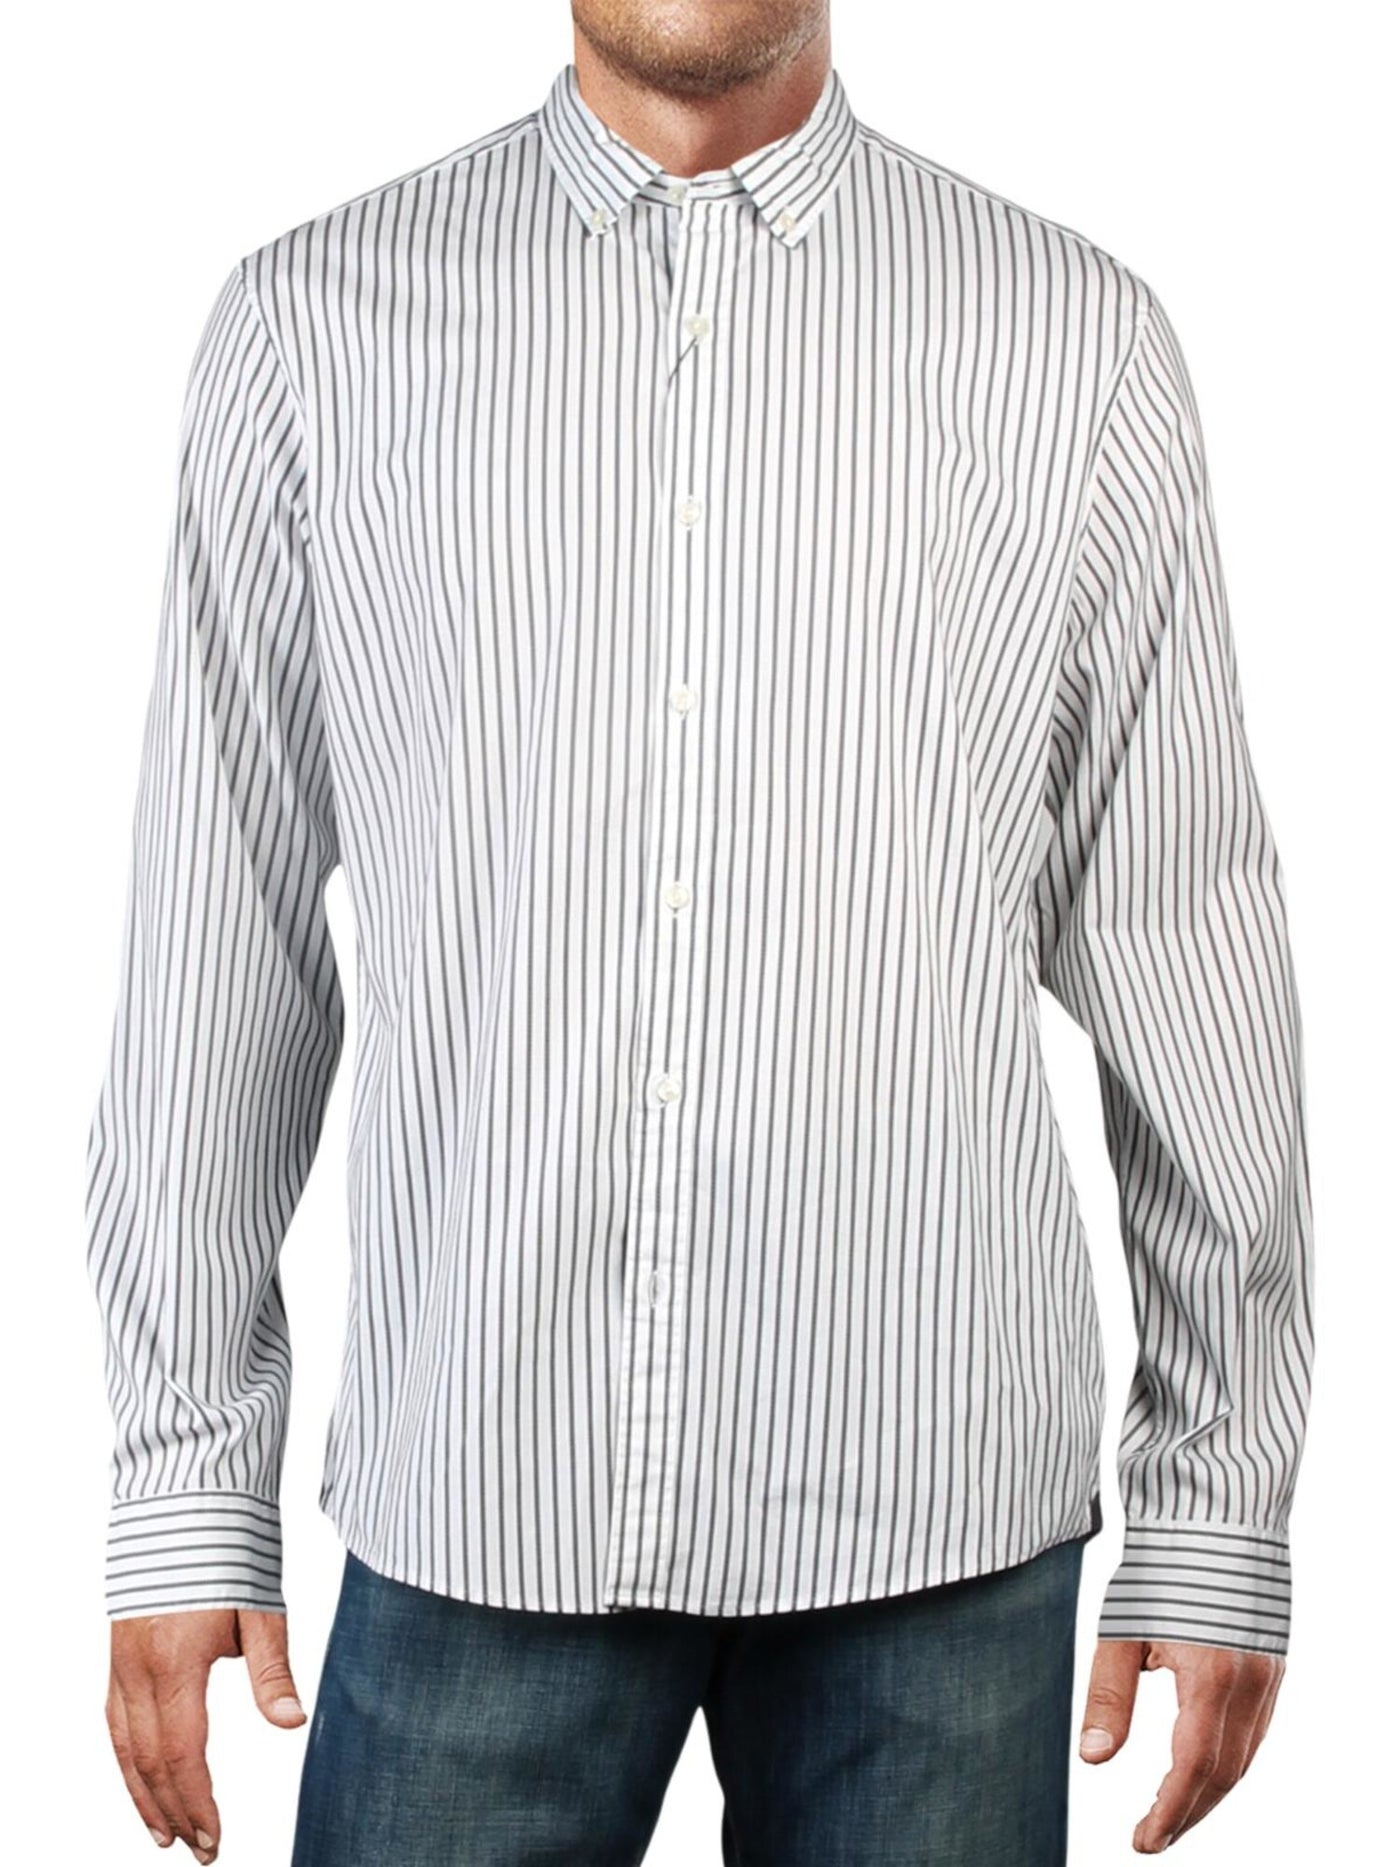 MICHAEL KORS Mens White Striped Slim Fit Button Down Cotton Casual Shirt S